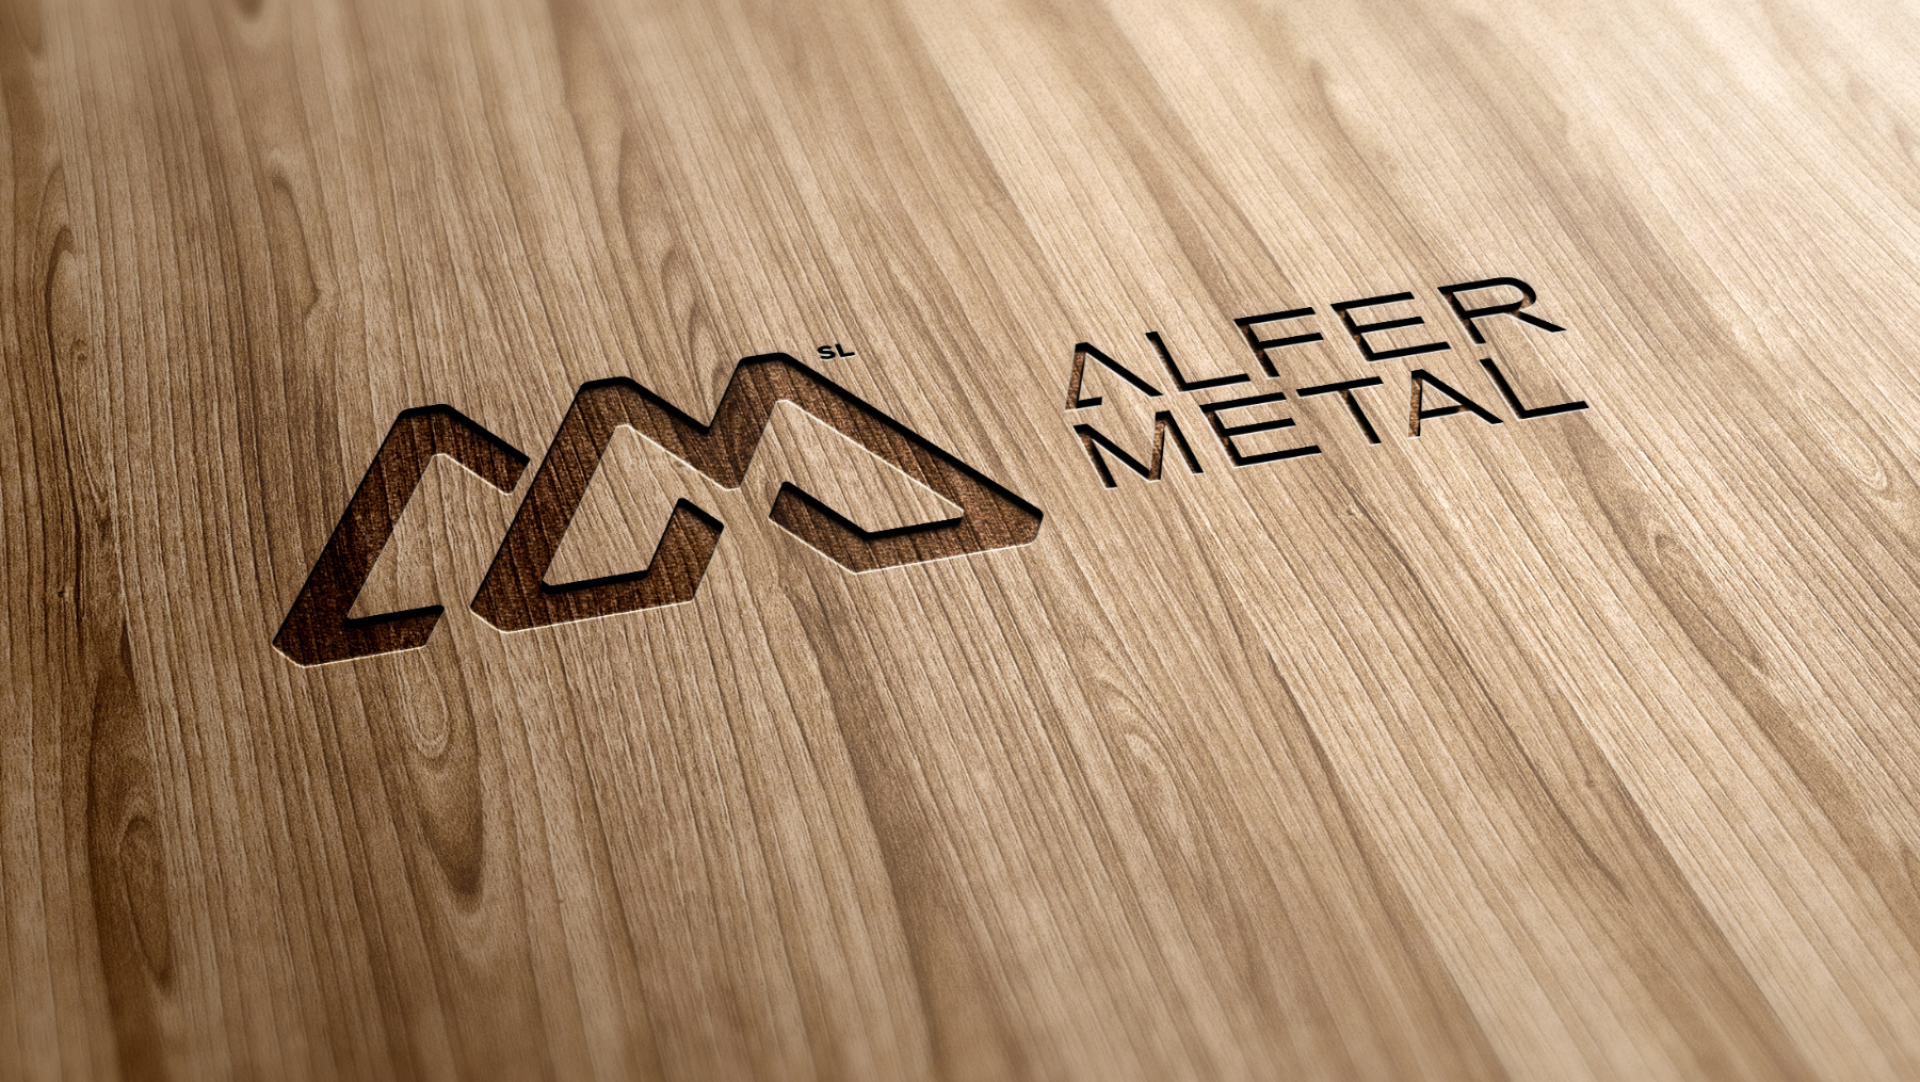 Alfer Metal - Professional services